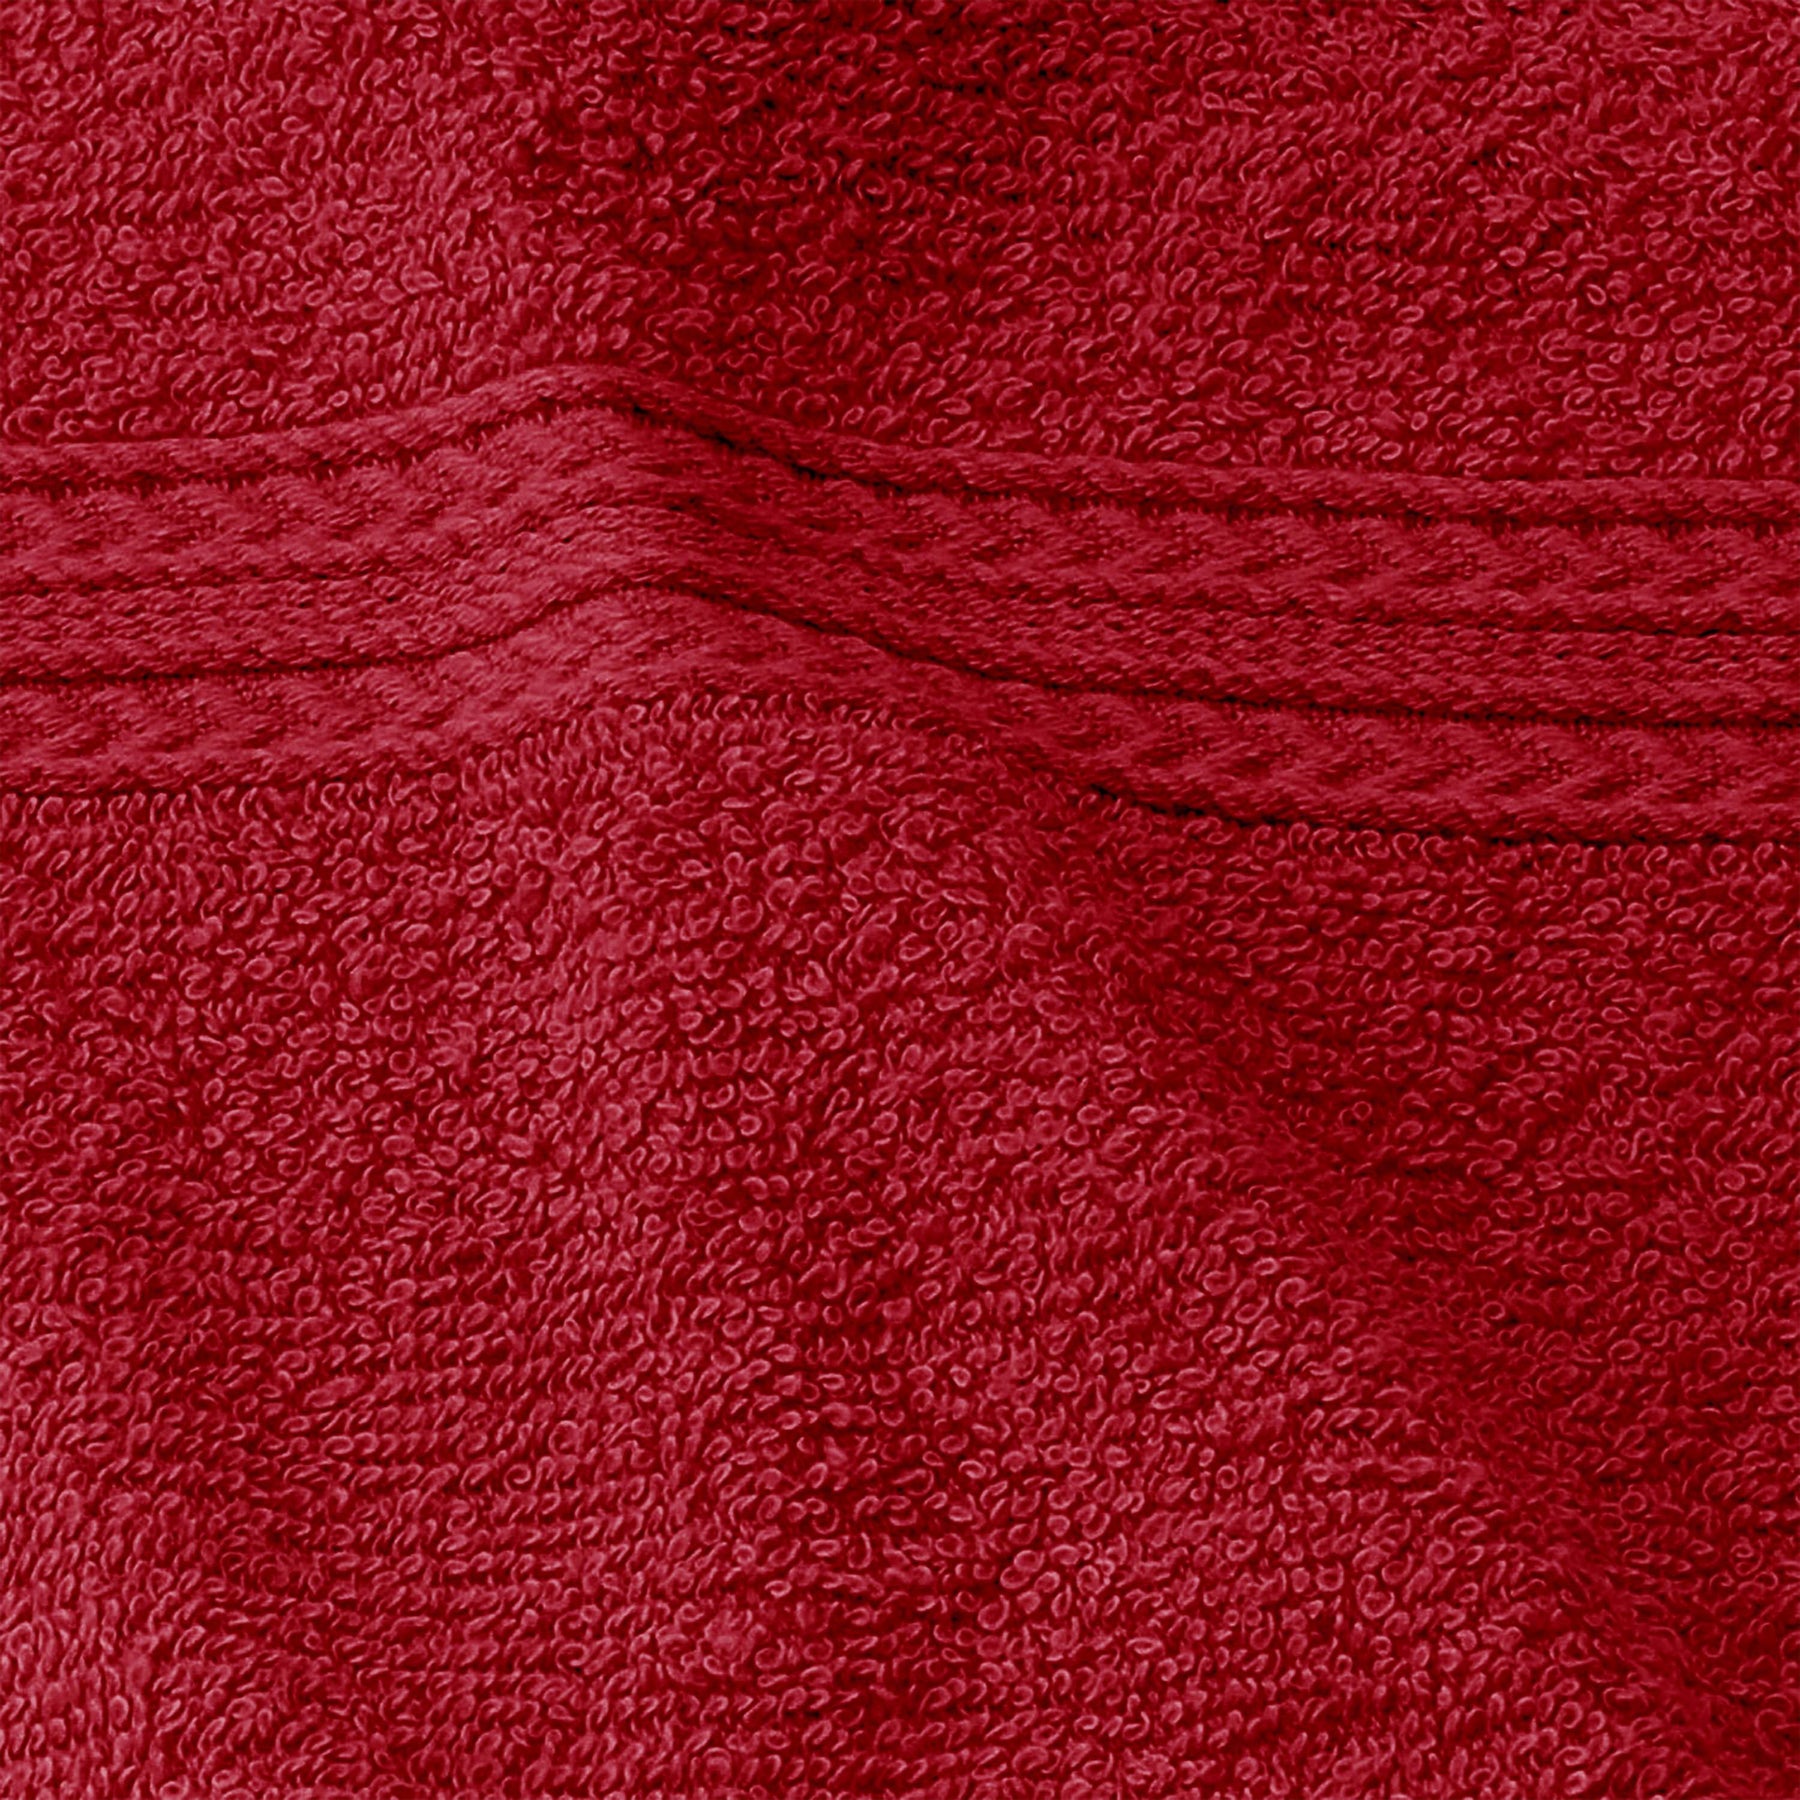 Superior Eco-Friendly Ring Spun Cotton 6-Piece Hand Towel Set - Cranberry